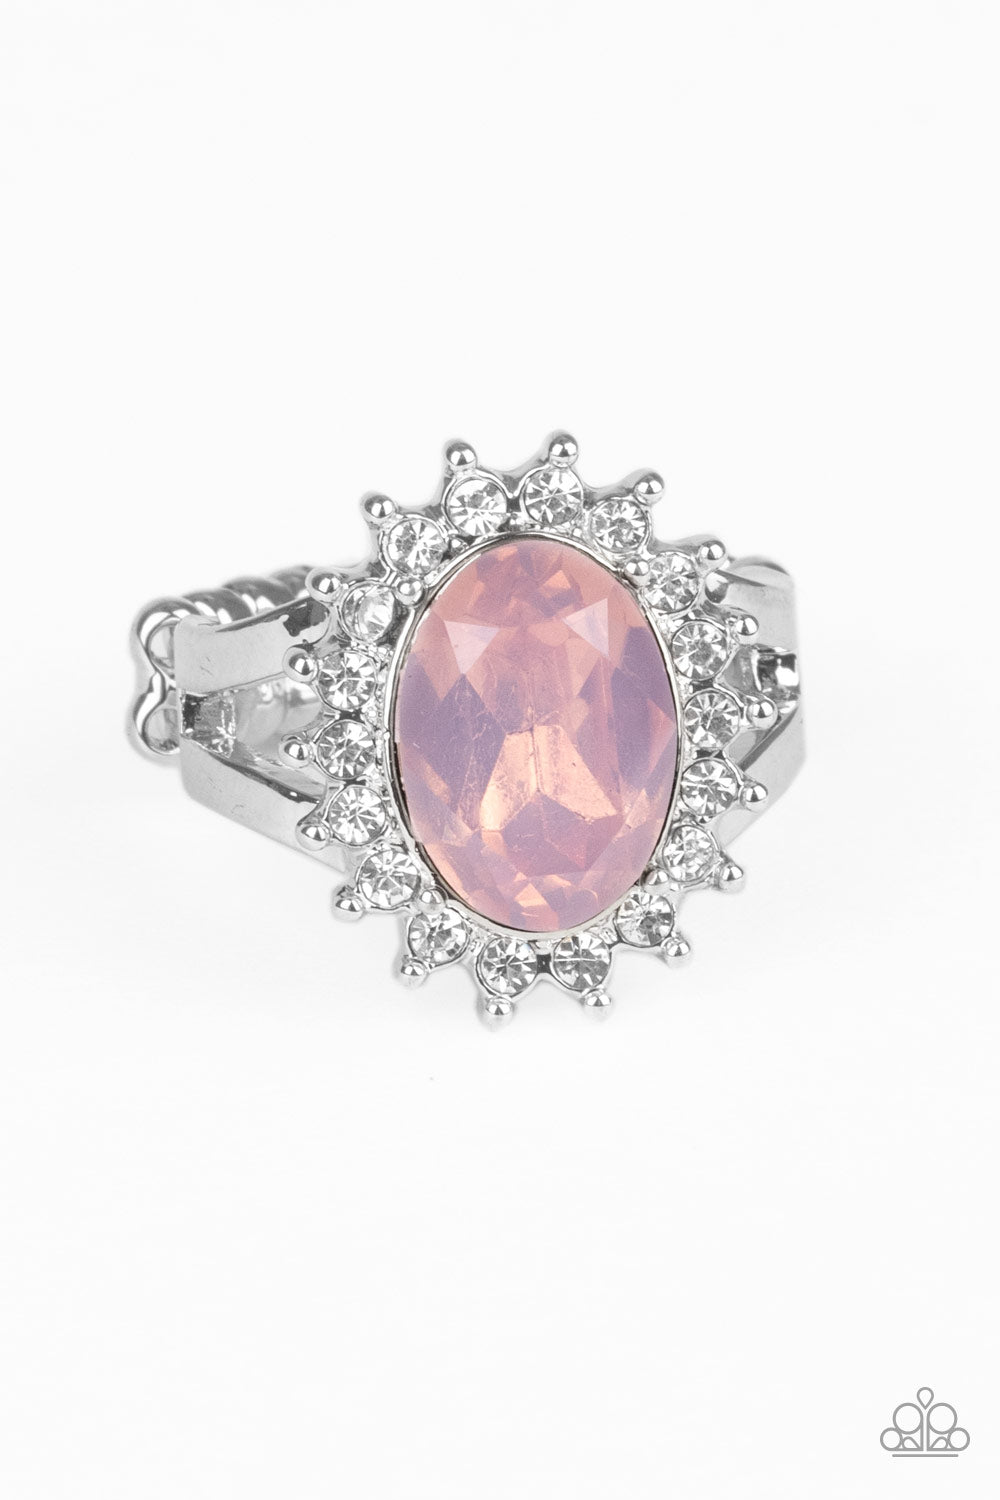 Iridescently illuminated - Pink - Spiffy Chick Jewelry